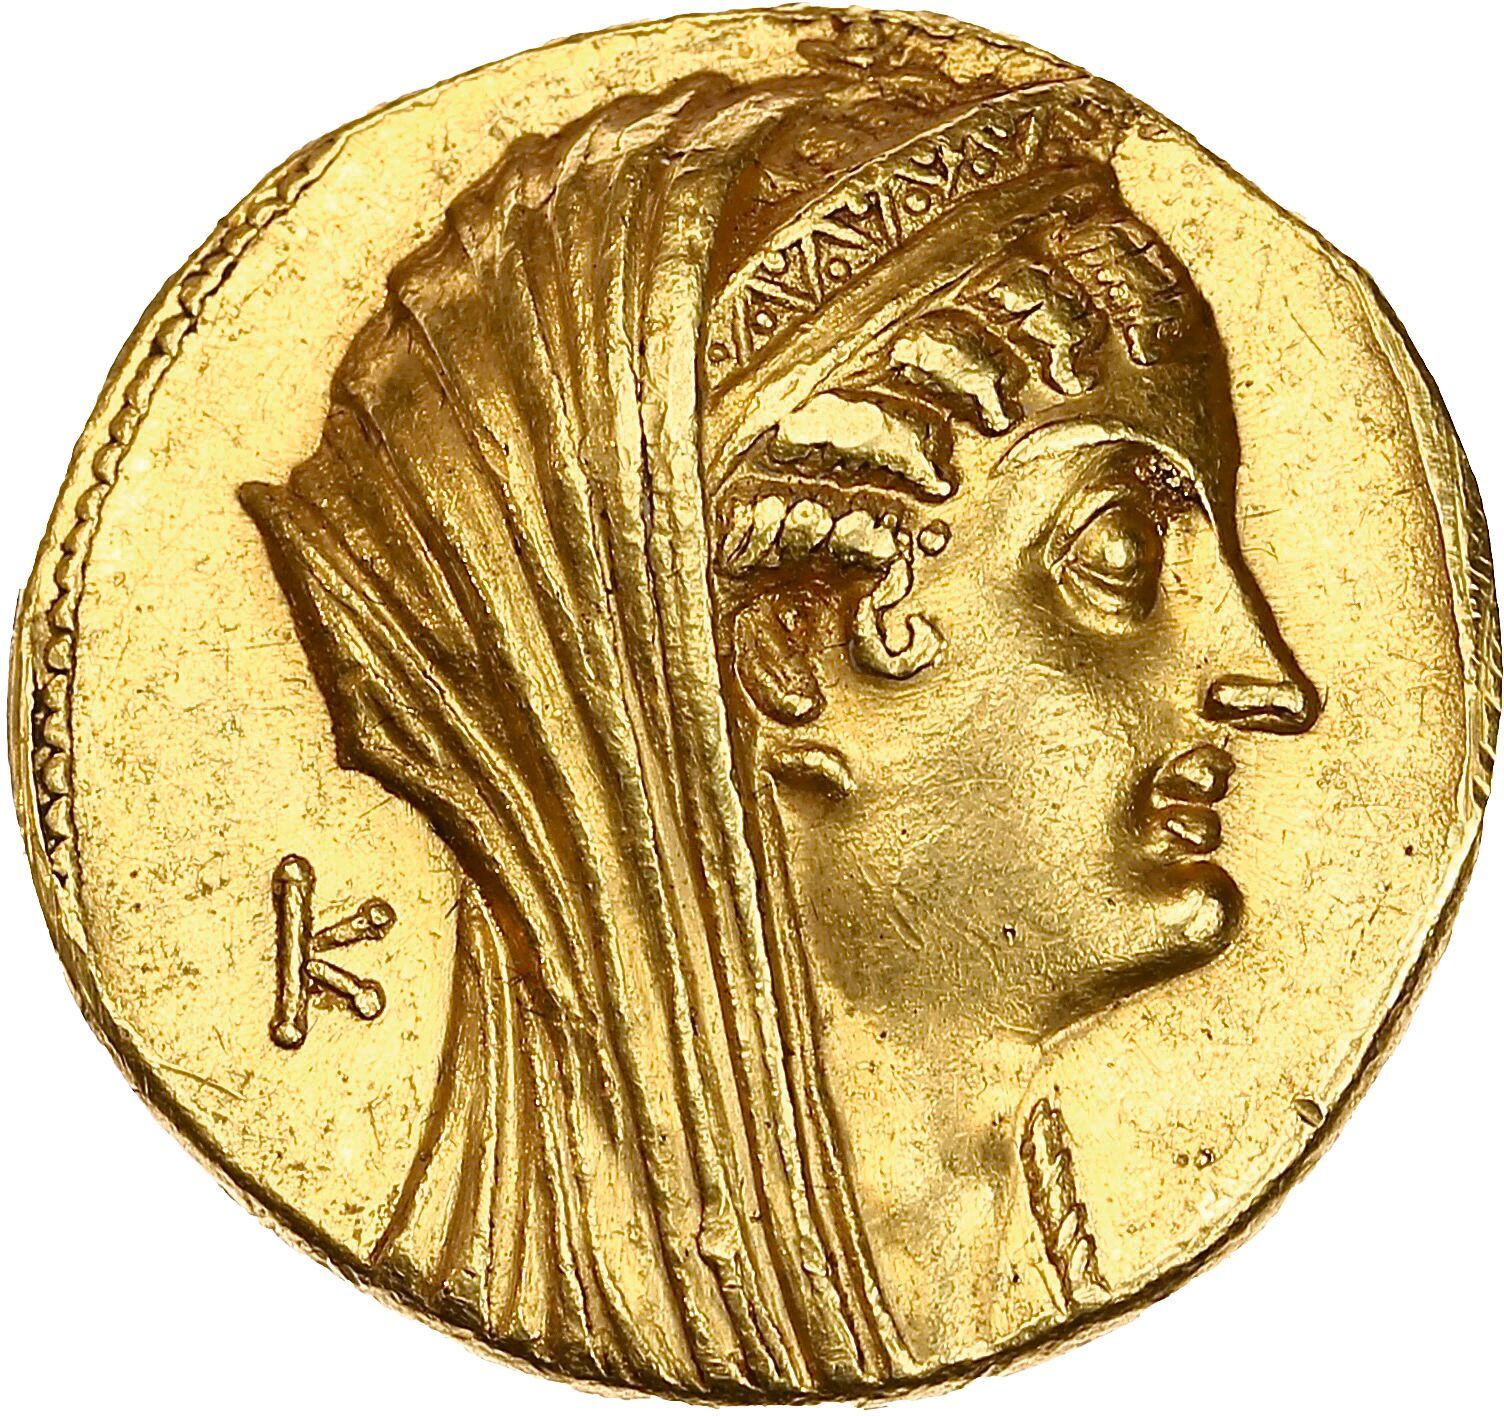 Null KINGDOM OF EGYPT
Ptolemy VI Philometor (185-146 BC) or Ptolemy VIII Everget&hellip;